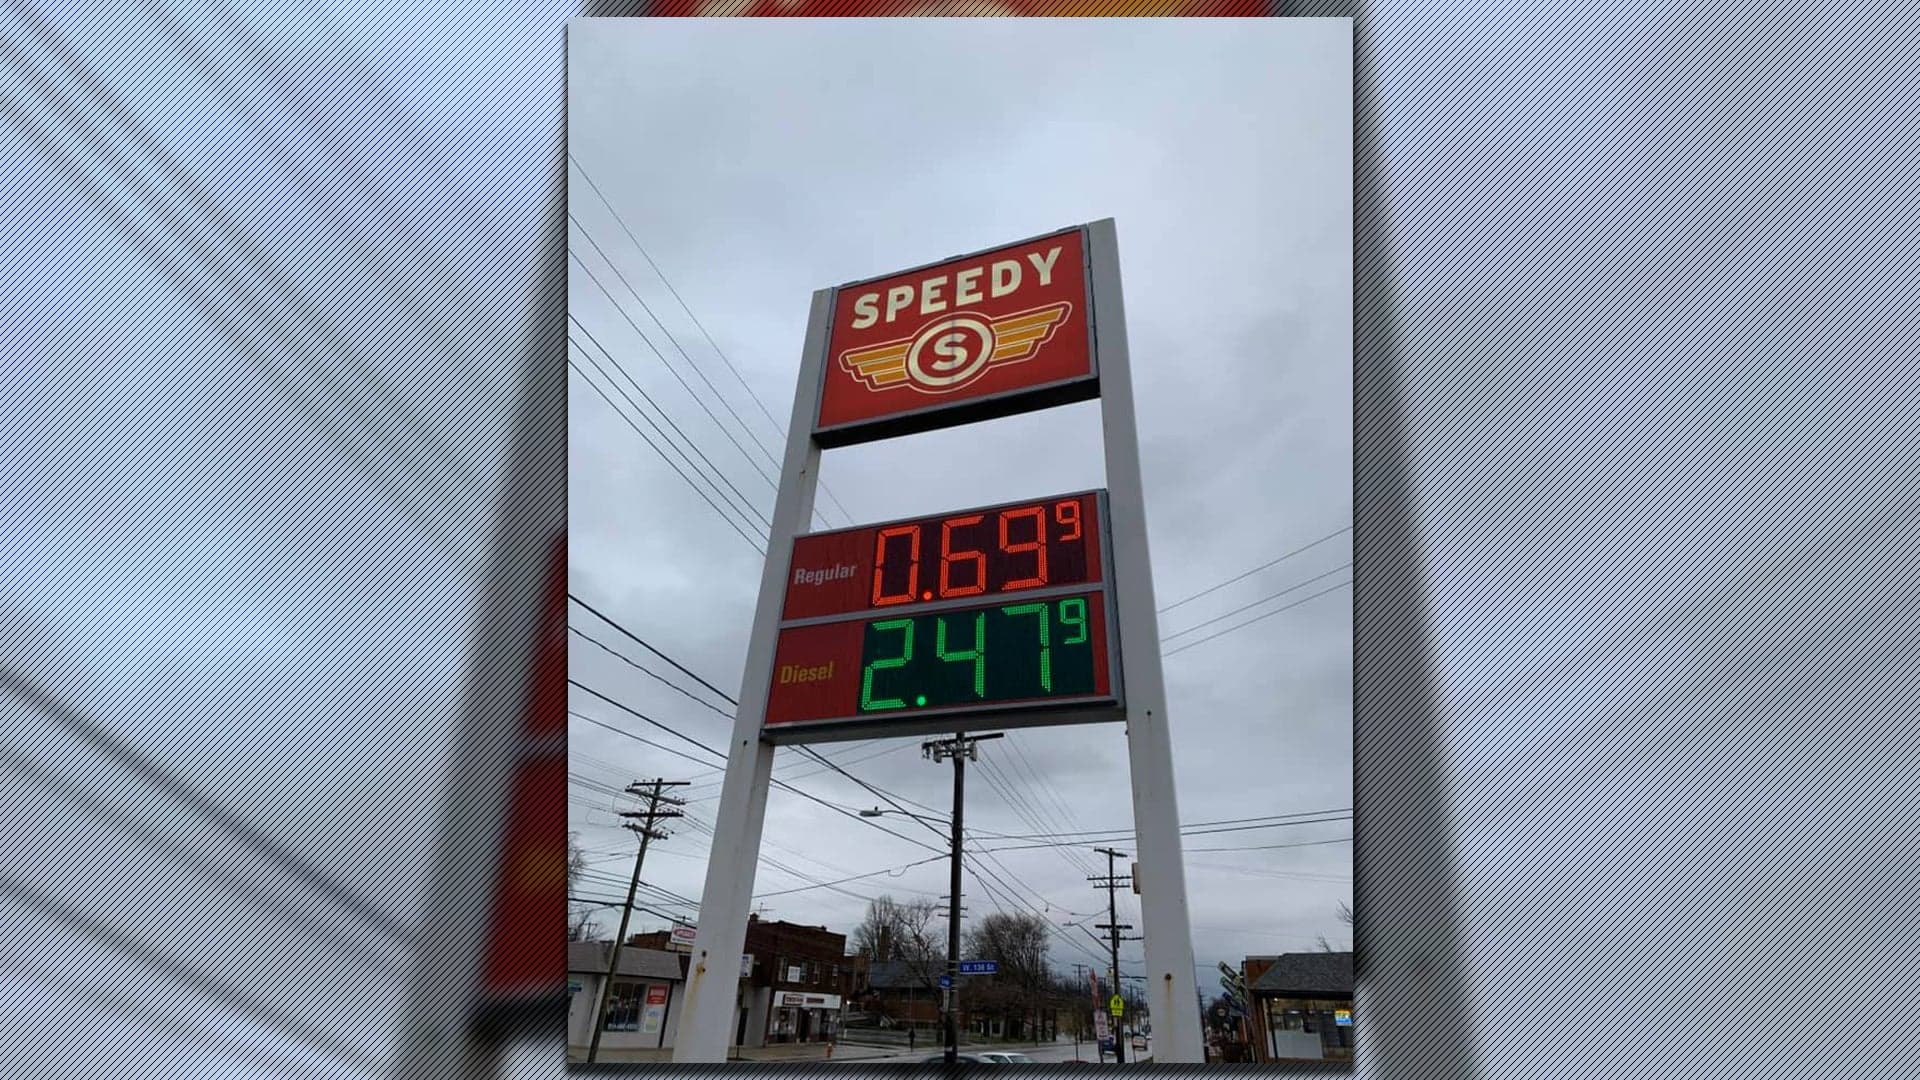 Ohio Gas Station Drops Gas Prices to $0.69 per Gallon